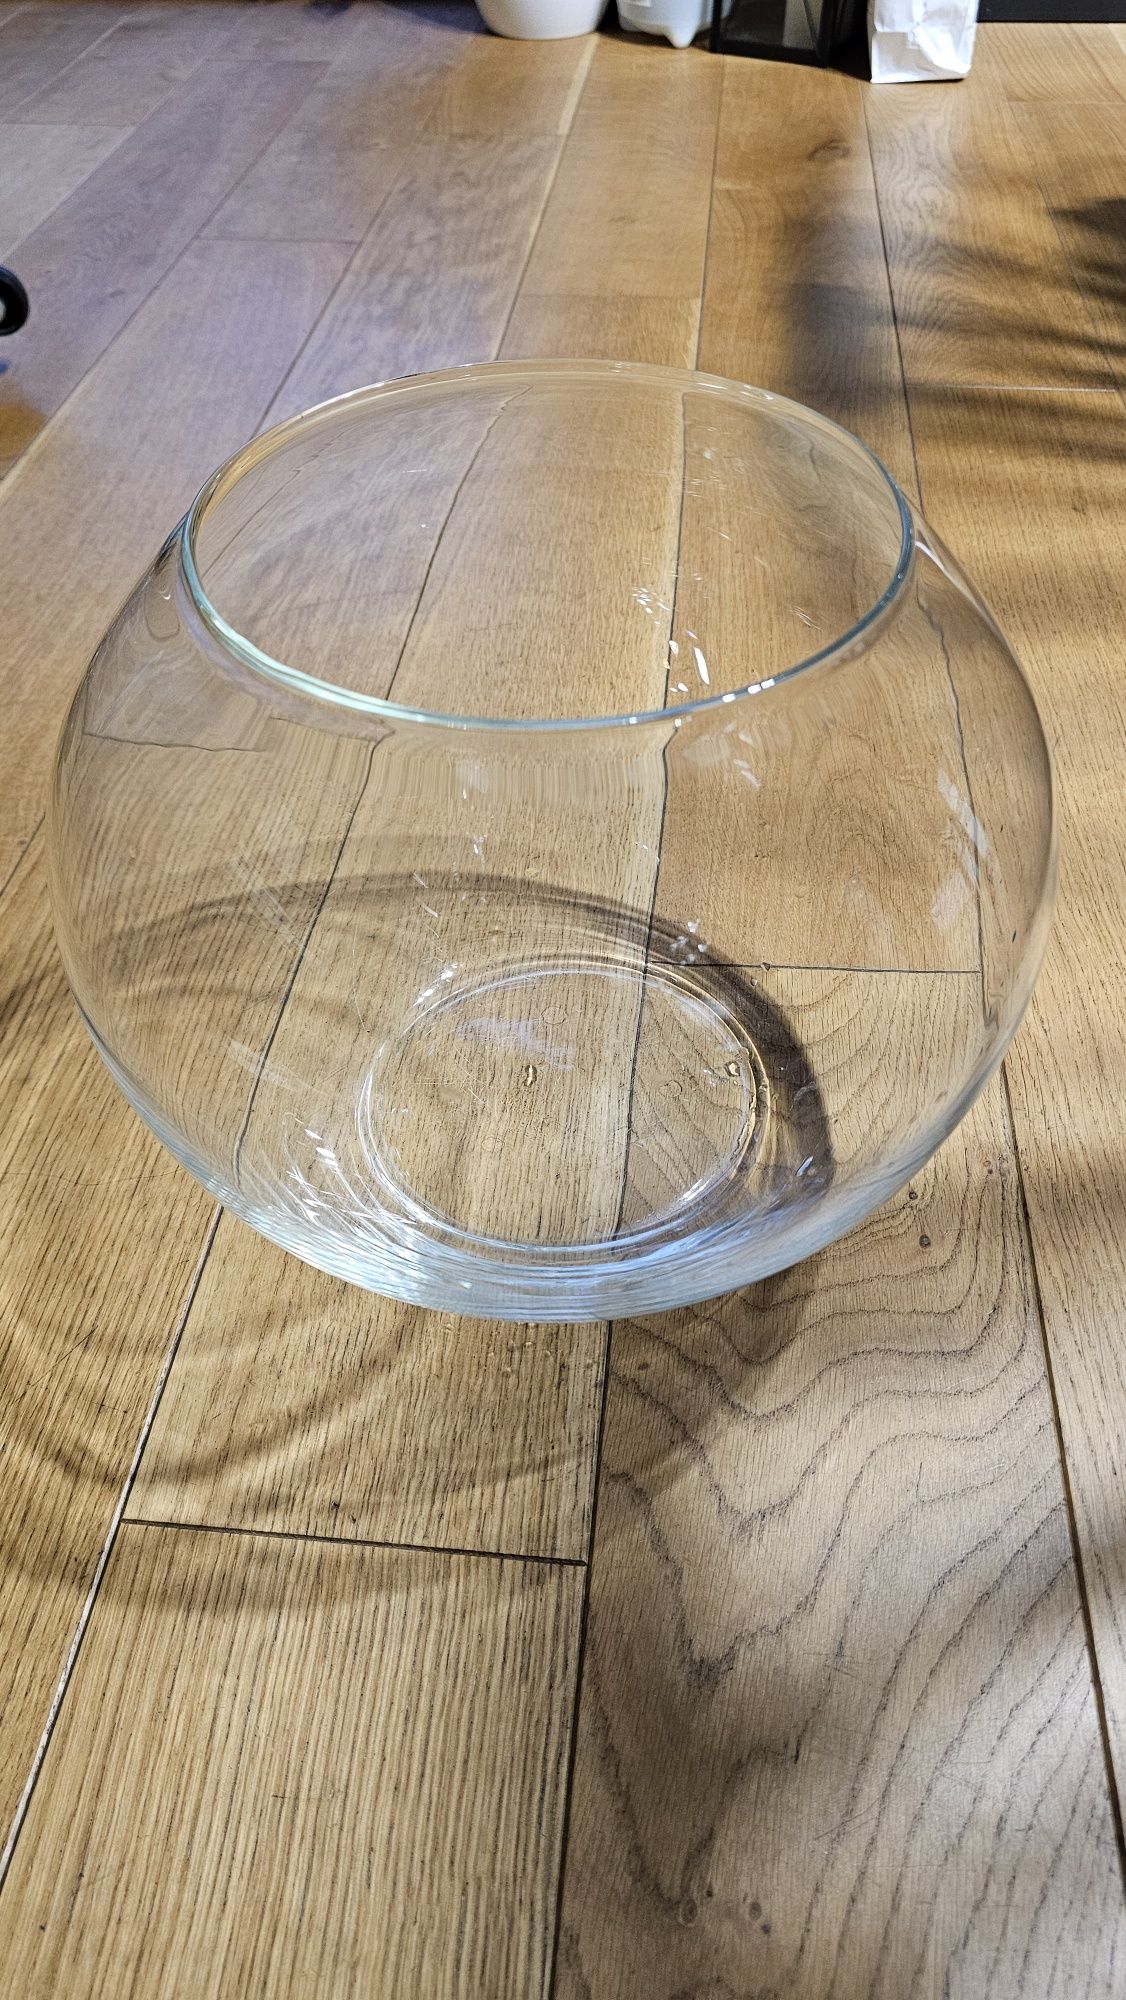 Kula szklana 13l, średnica 30 cm